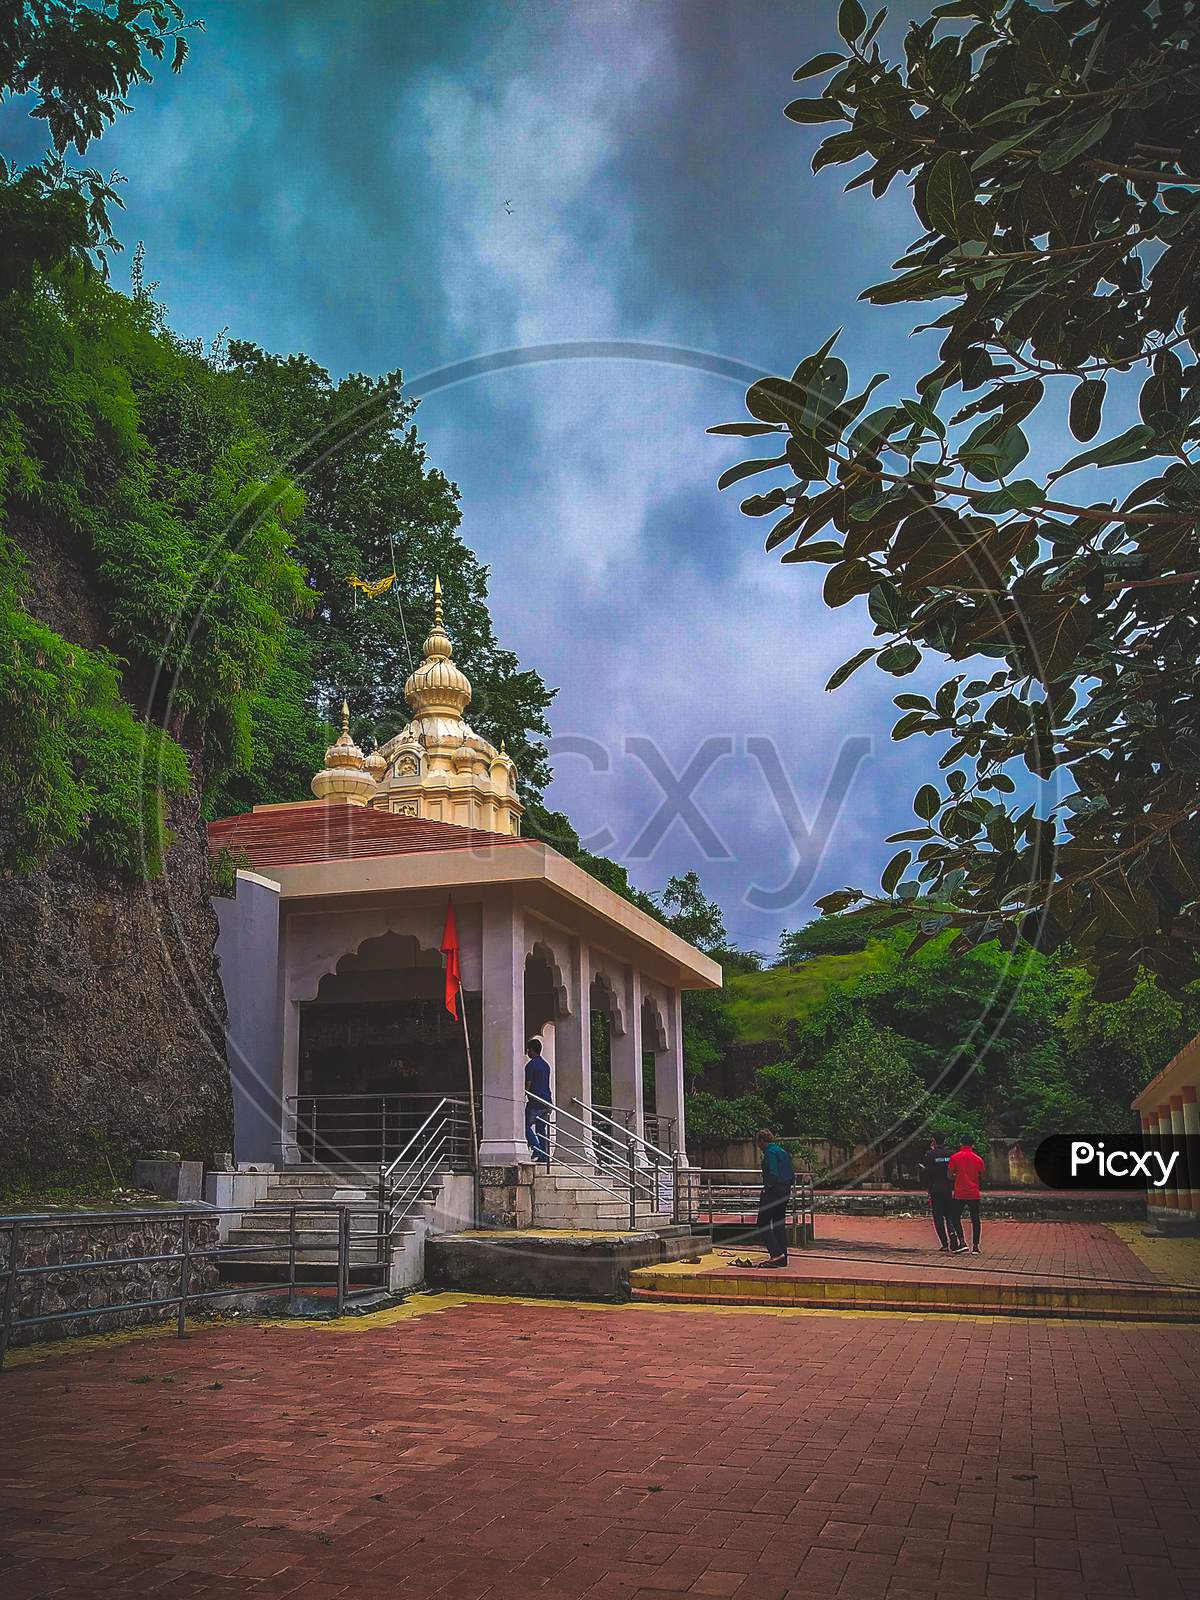 Rameshwar temple